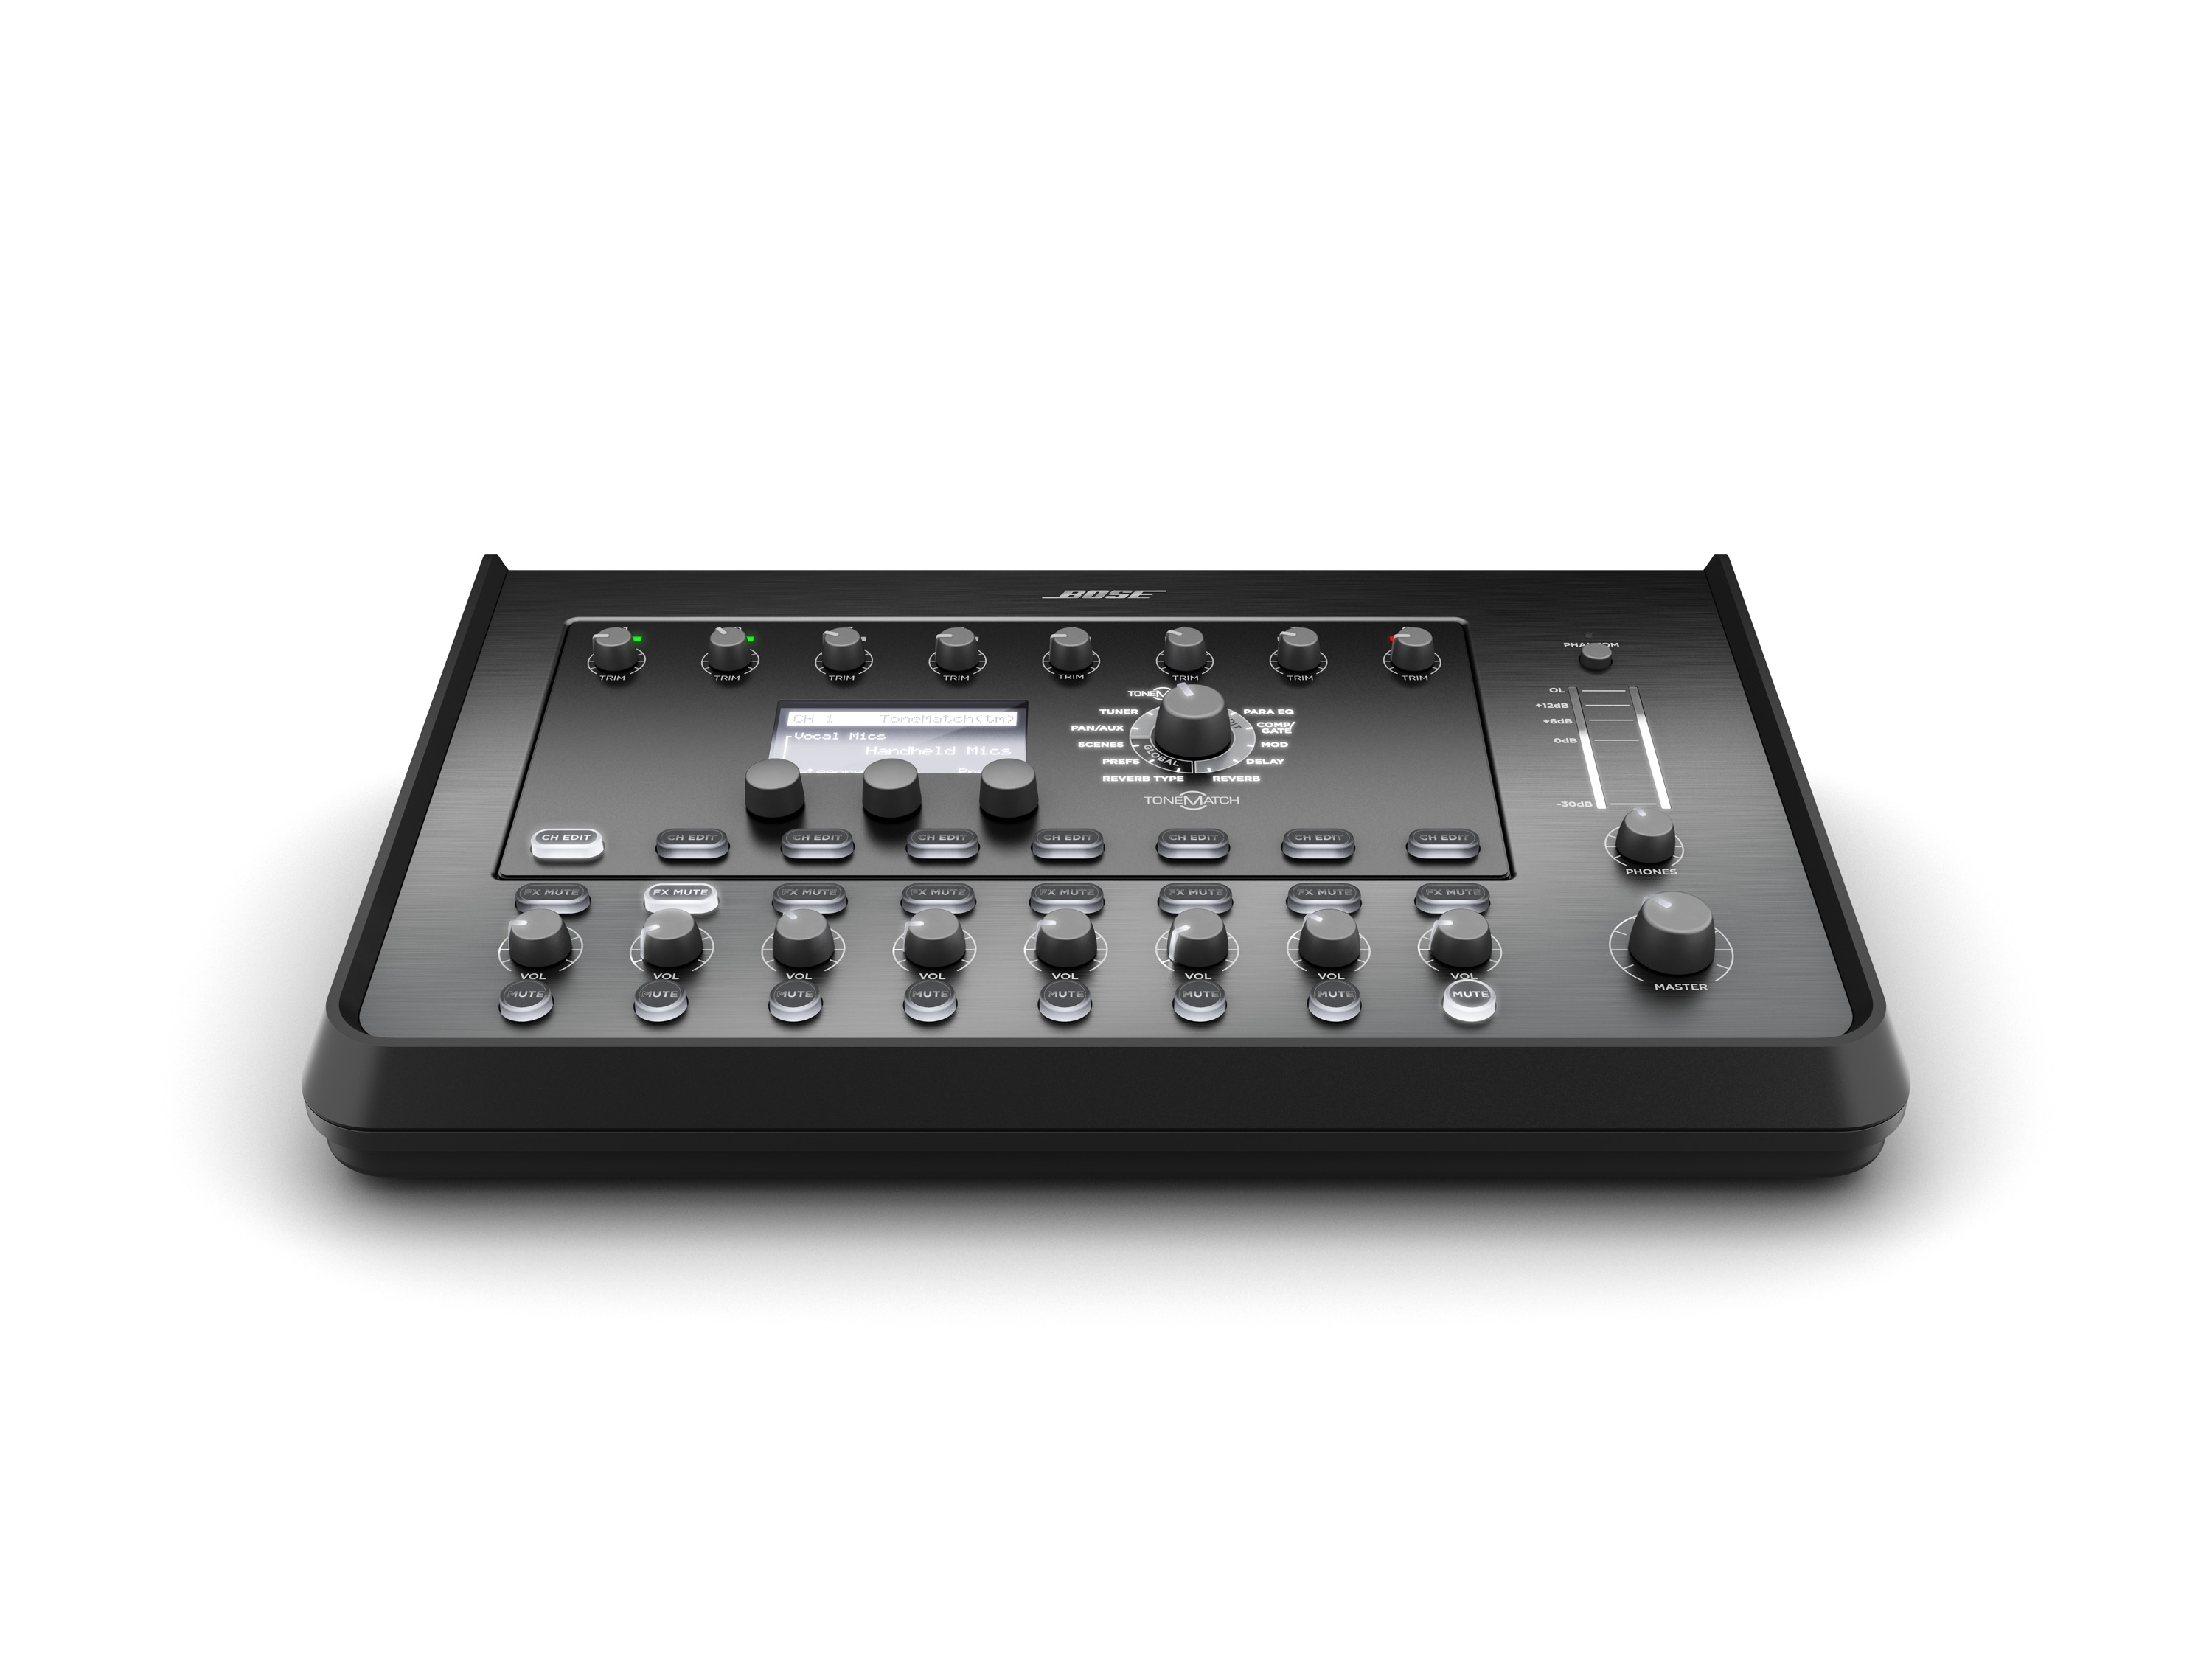 Bose T8s Tonematch - Analog mixing desk - Variation 1